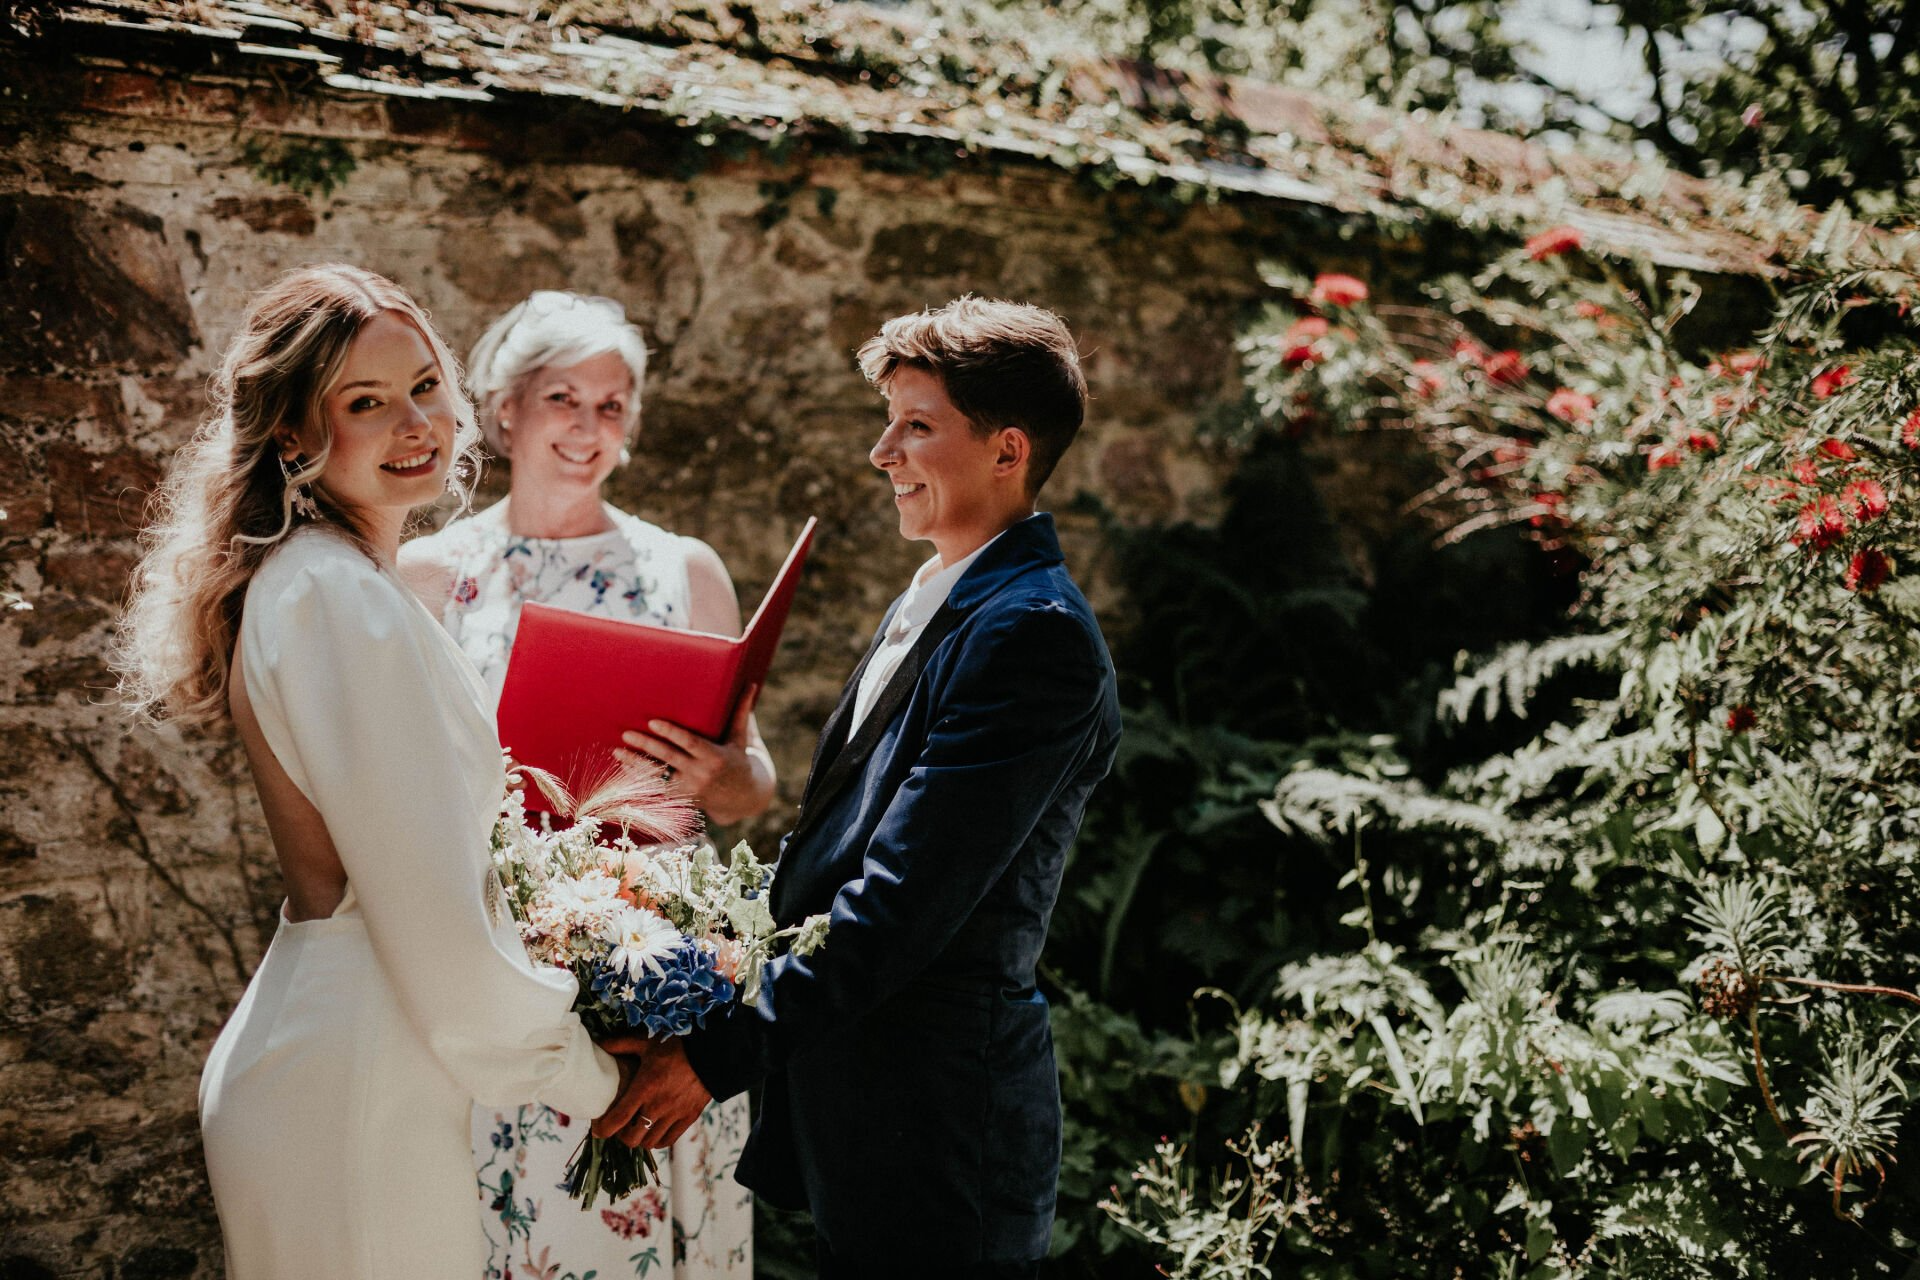 Sara Price Celebrant  with bride and bride during a garden wedding ceremony